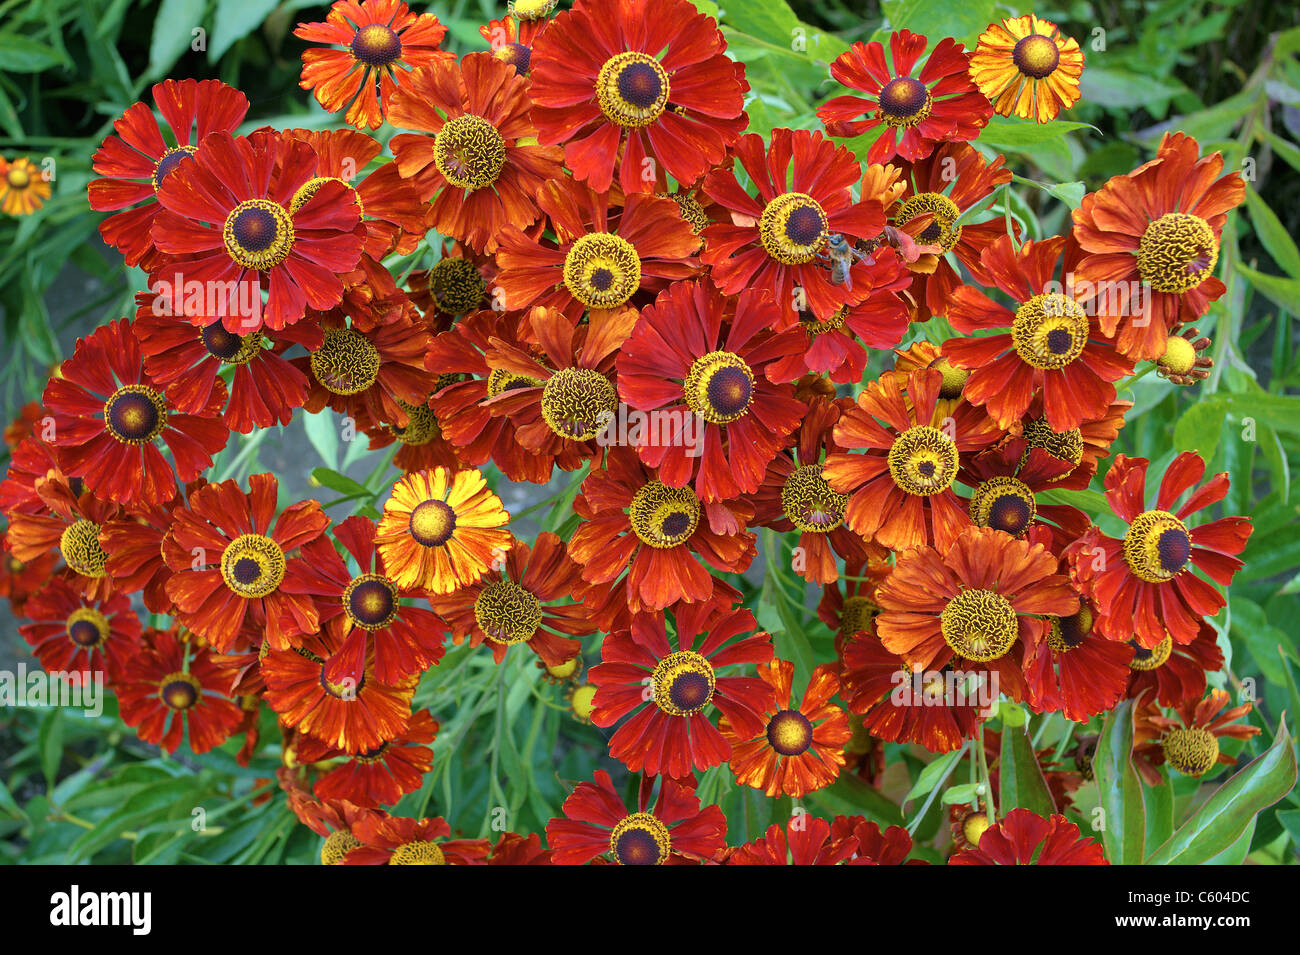 Red orange Helen's flowers cluster Helenium Stock Photo